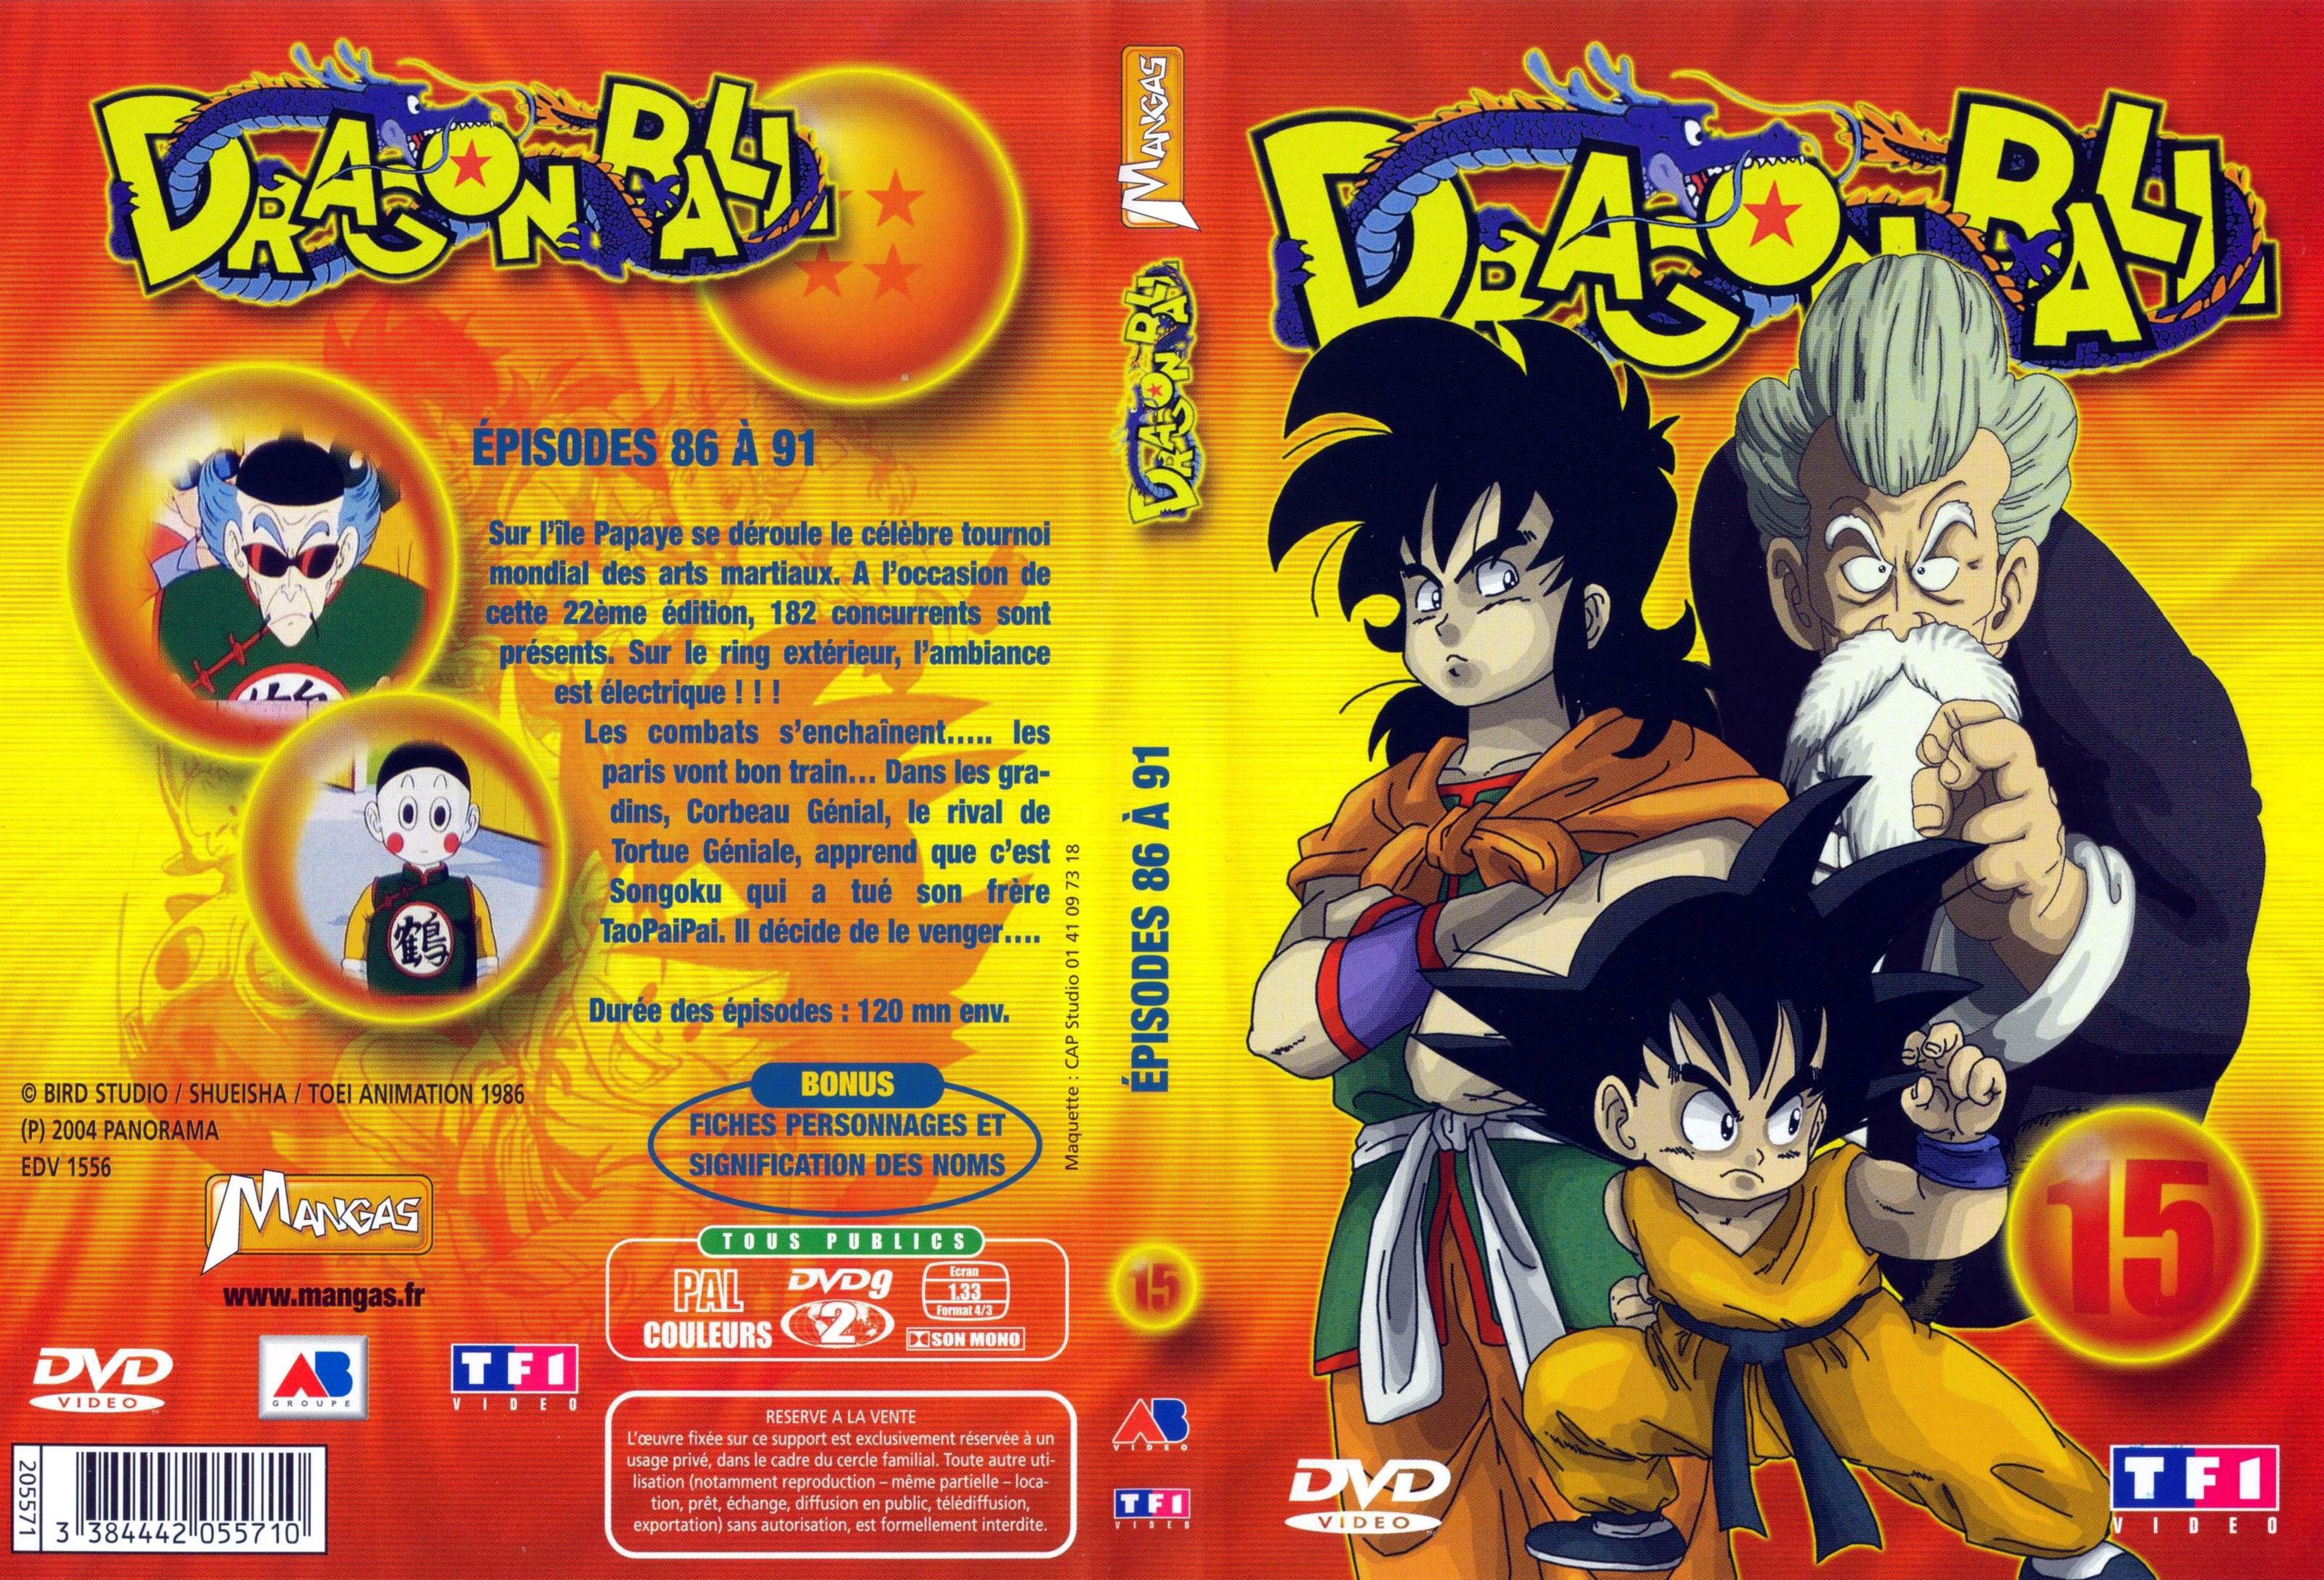 Jaquette DVD Dragon ball vol 15